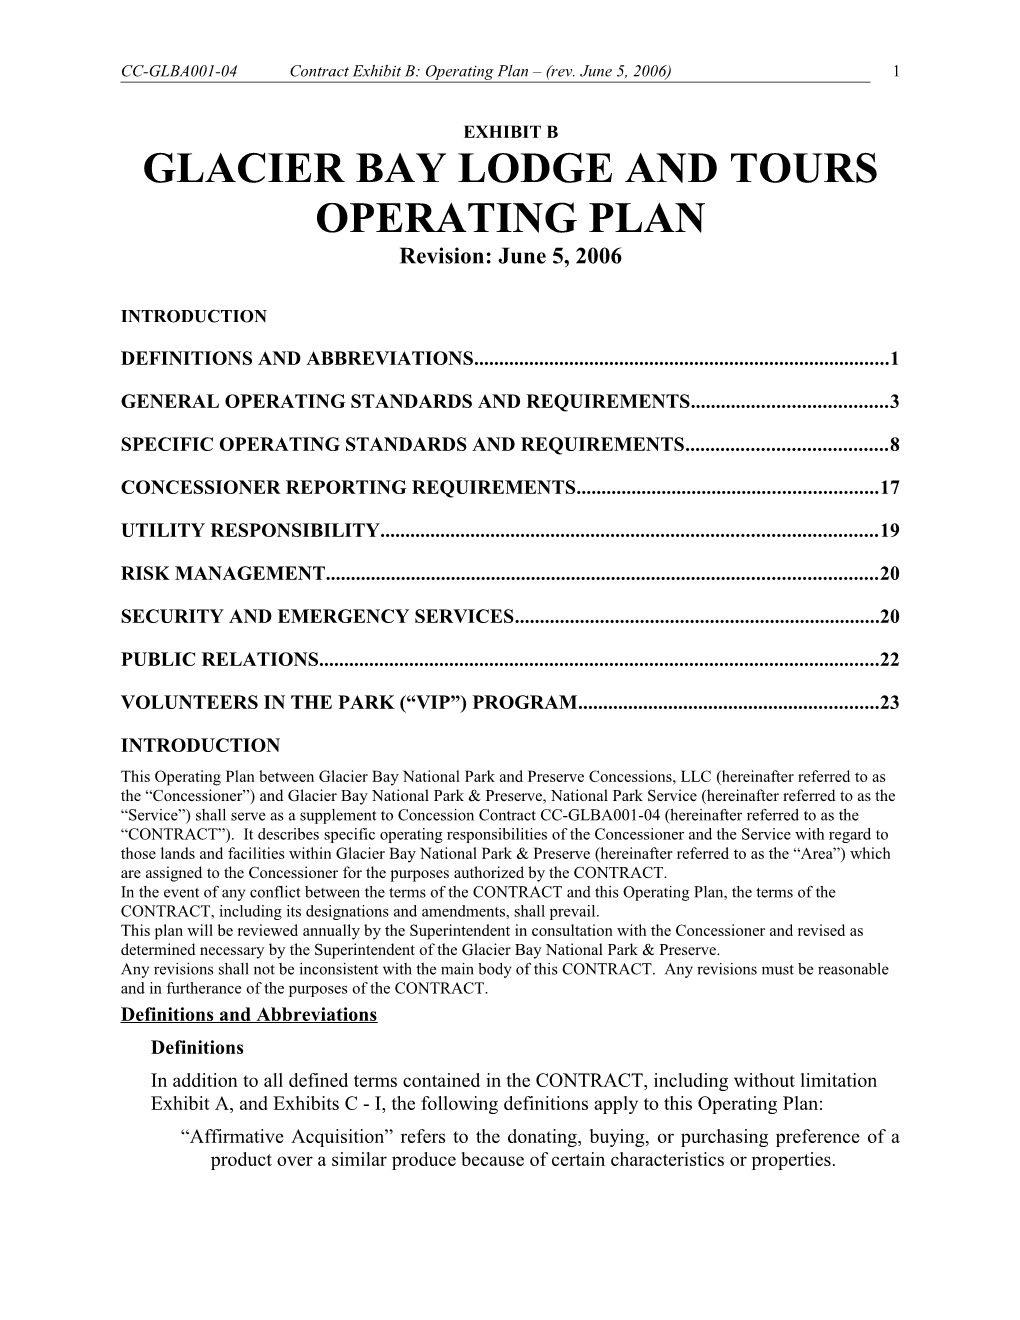 Glacier Bay Lodge and Tours